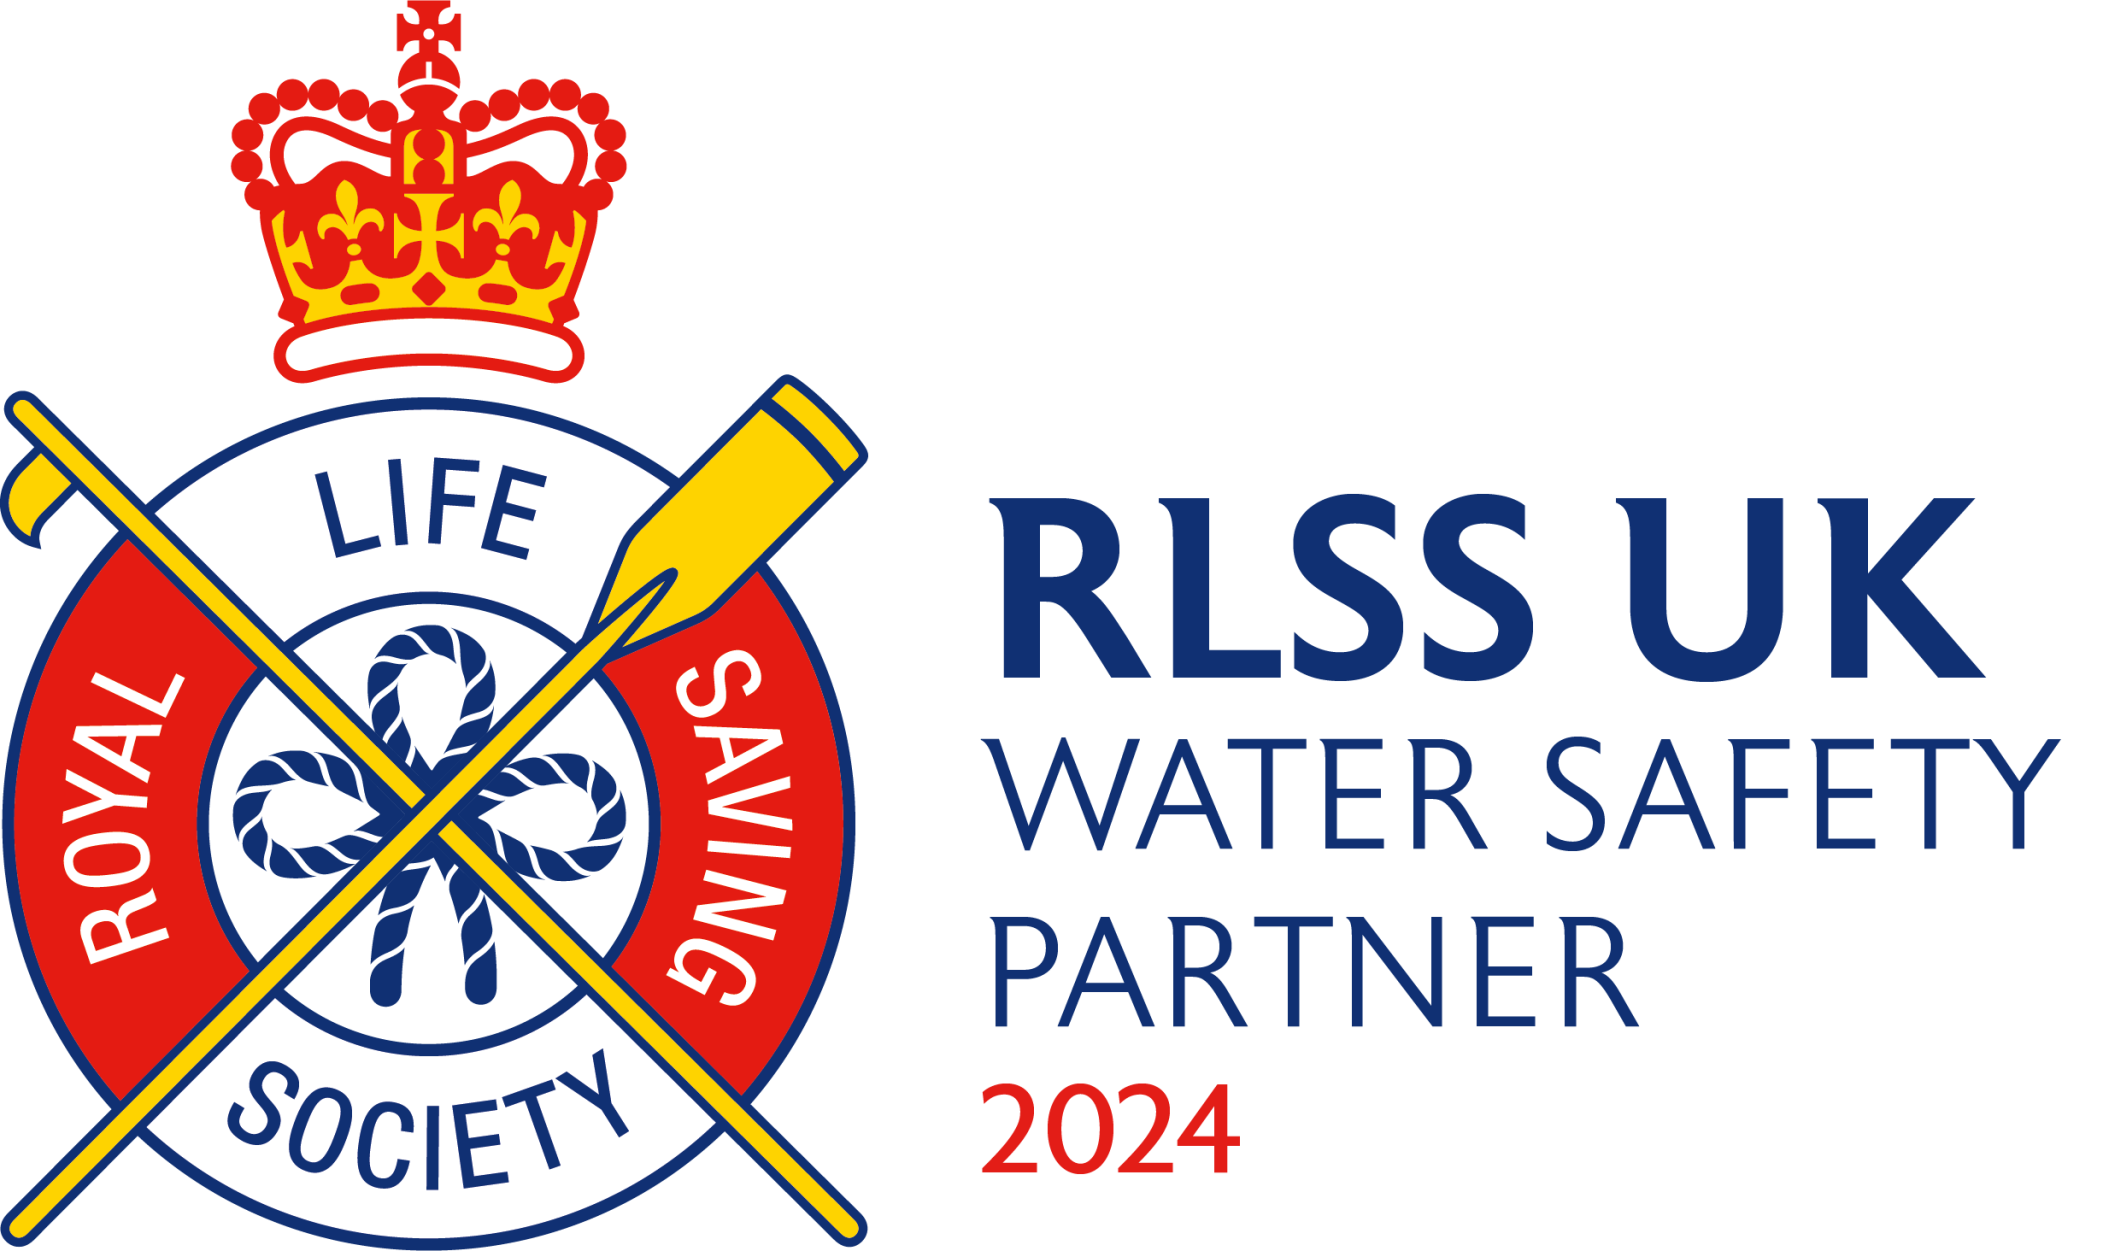 RLSS UK Water Safety